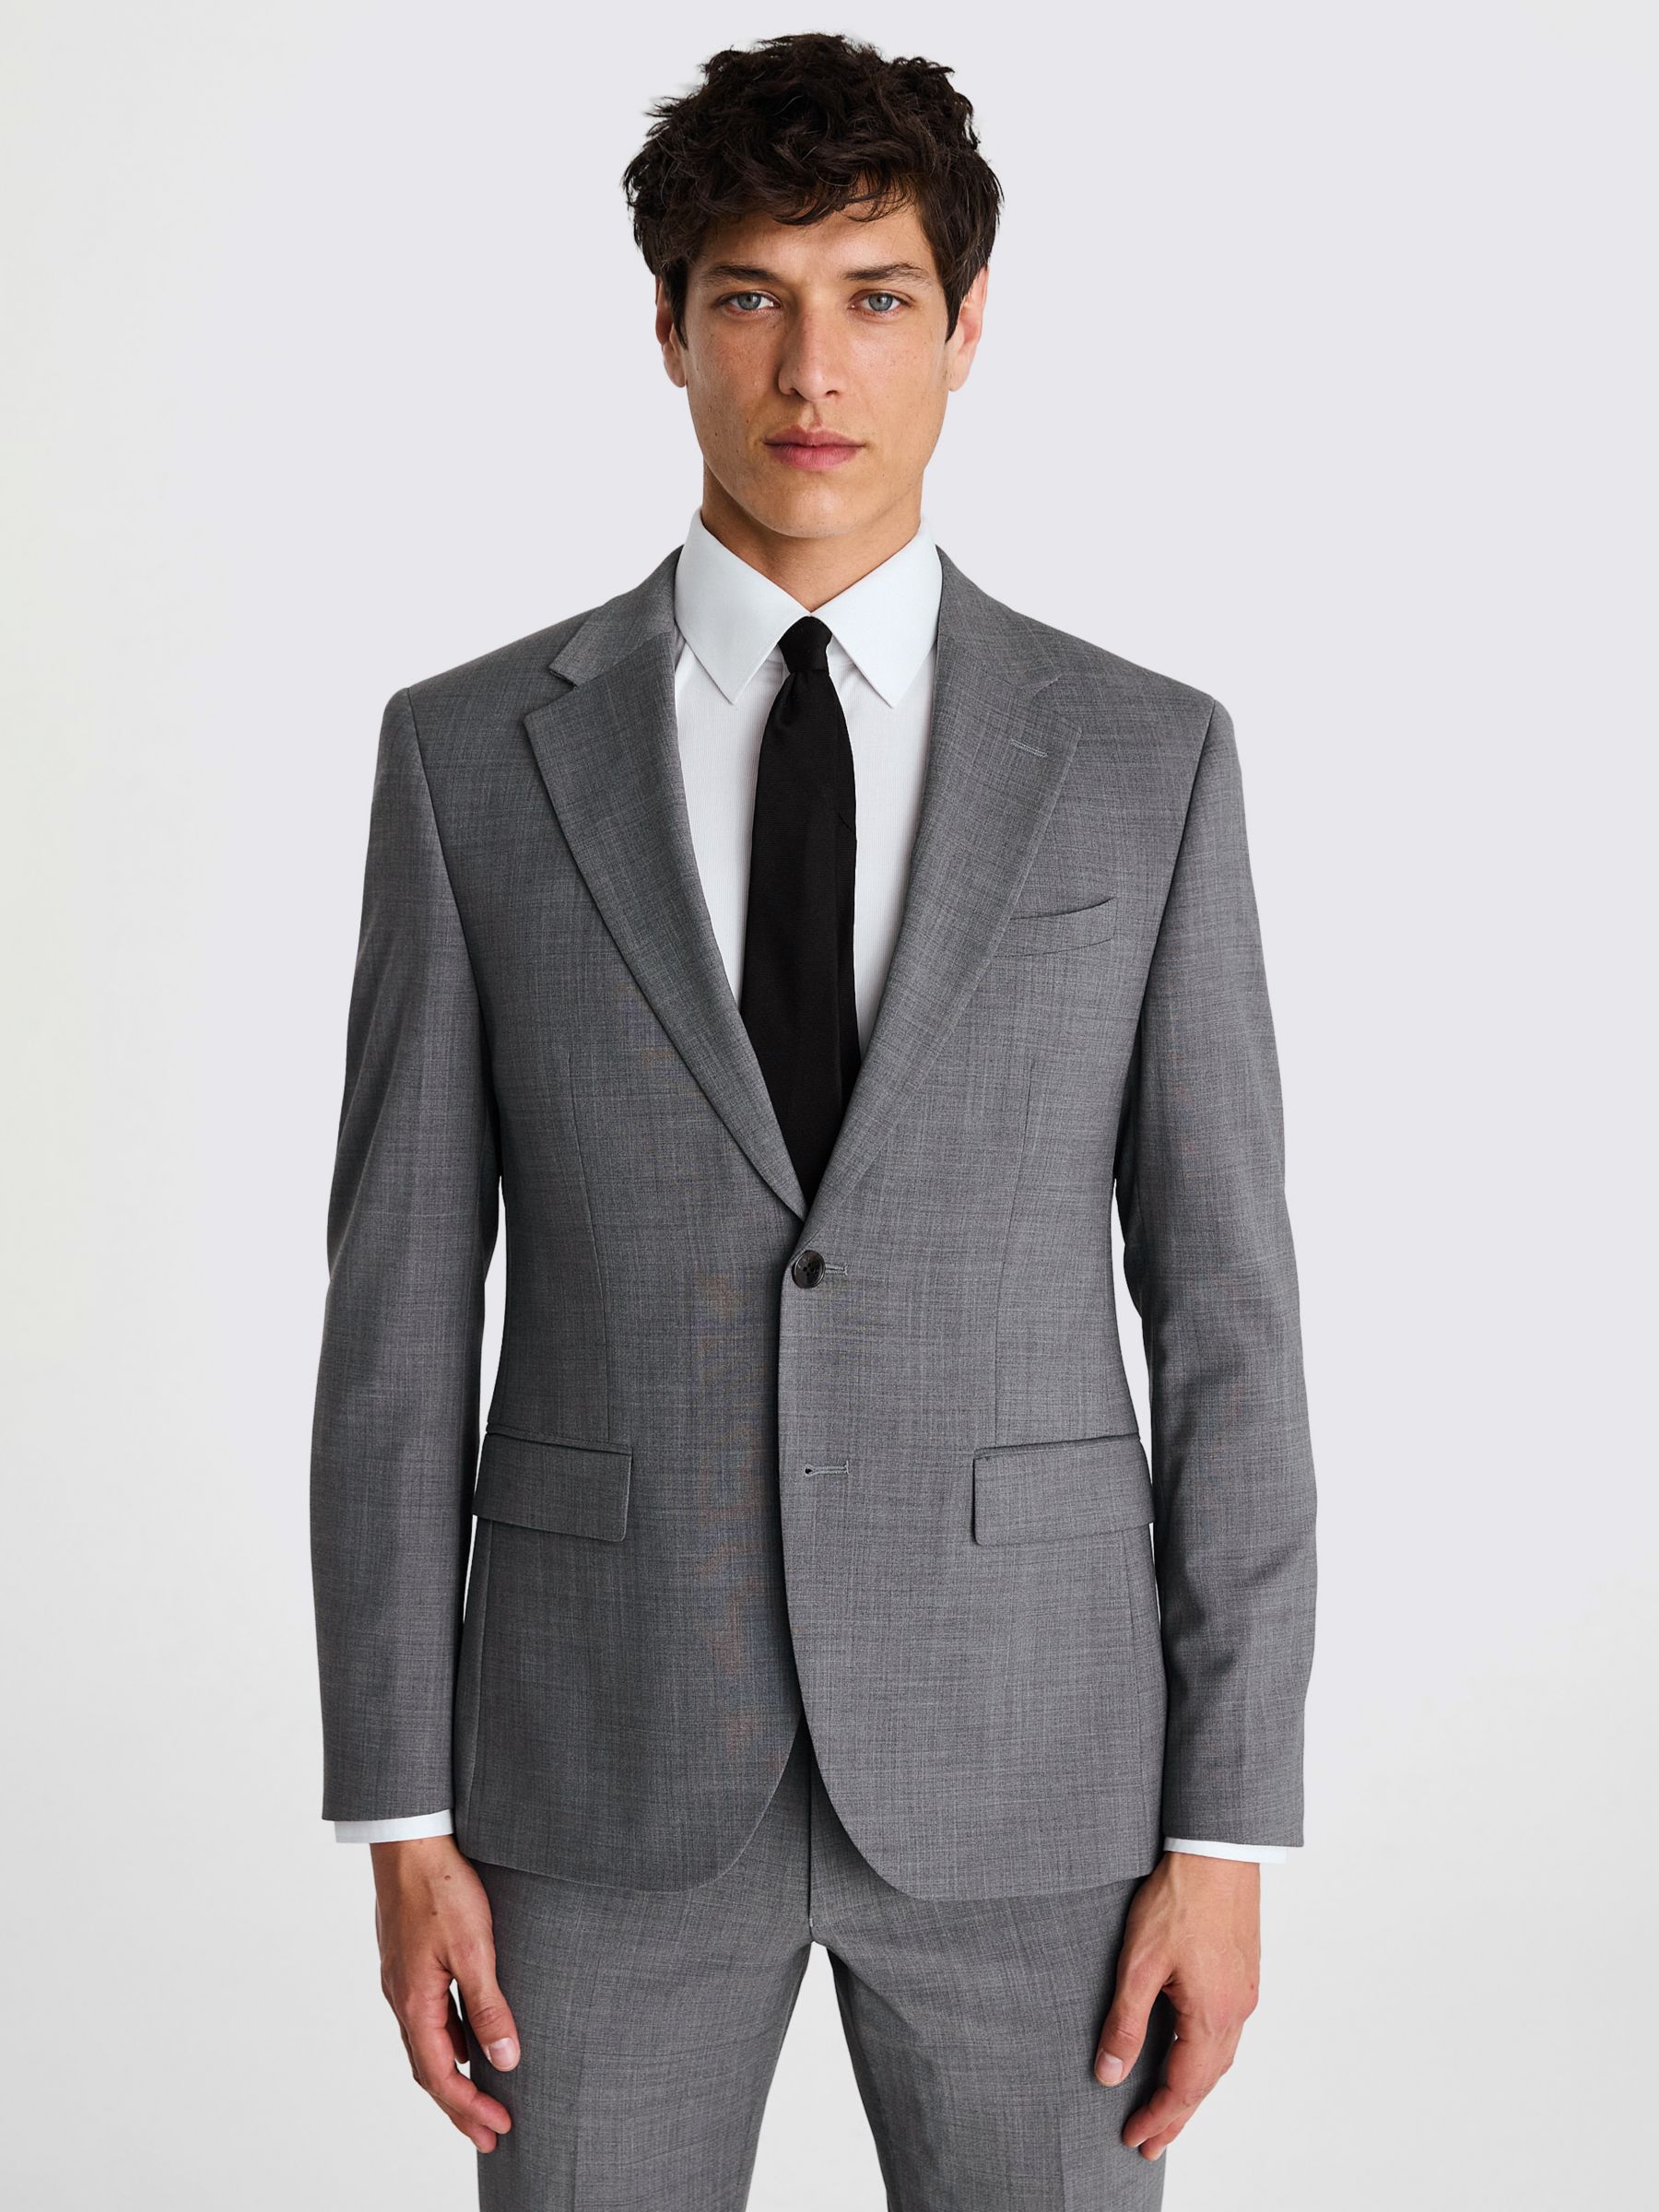 Moss x DKNY Wool Blend Slim Fit Suit Jacket, Grey at John Lewis & Partners